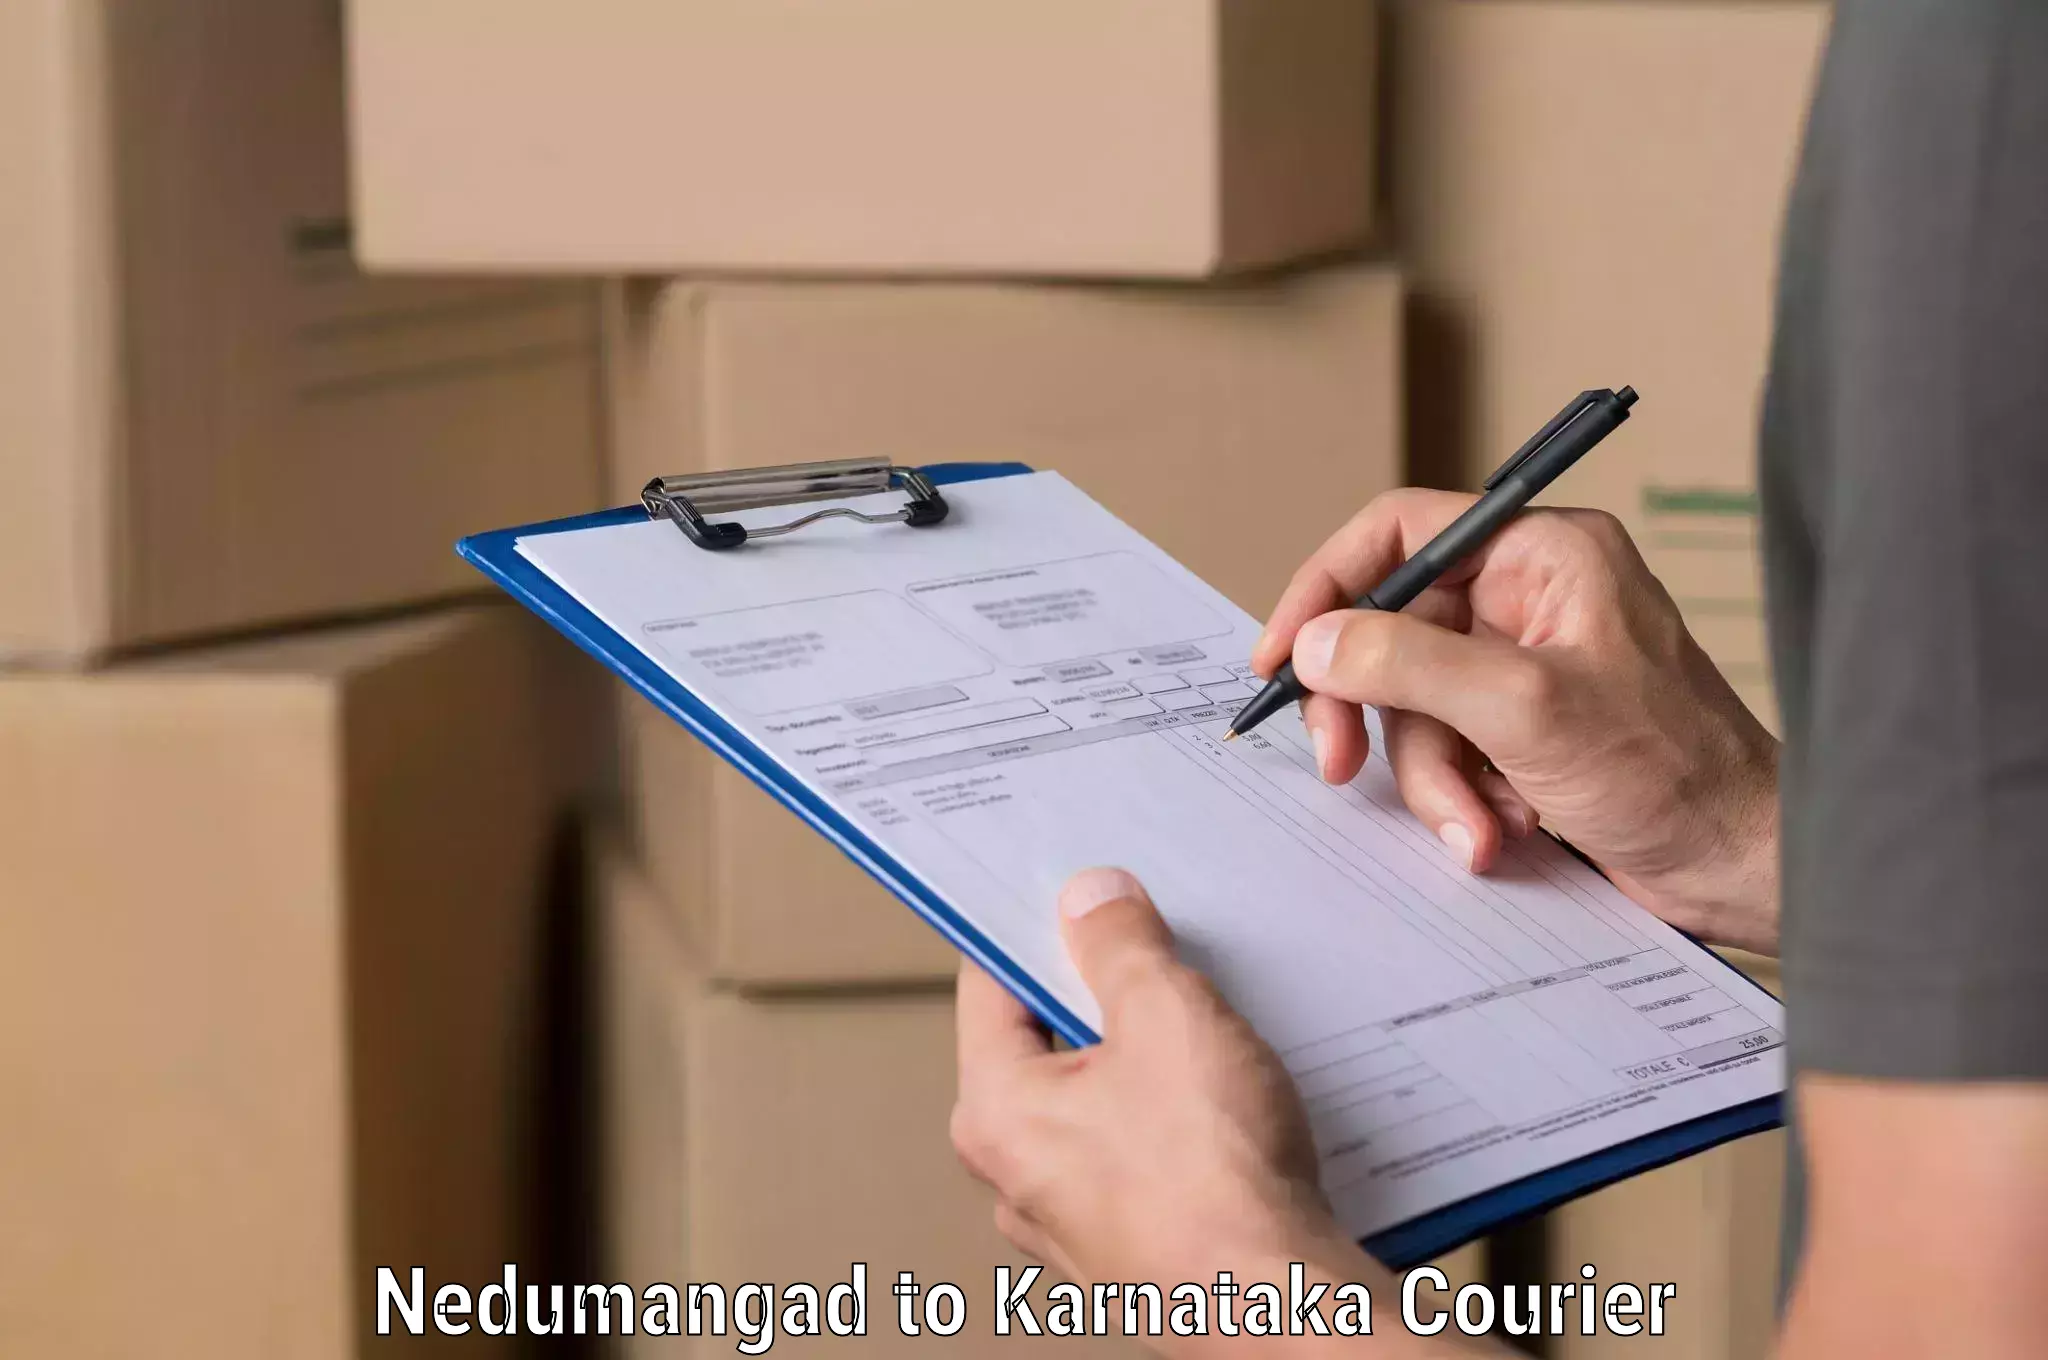 Supply chain delivery Nedumangad to Karwar